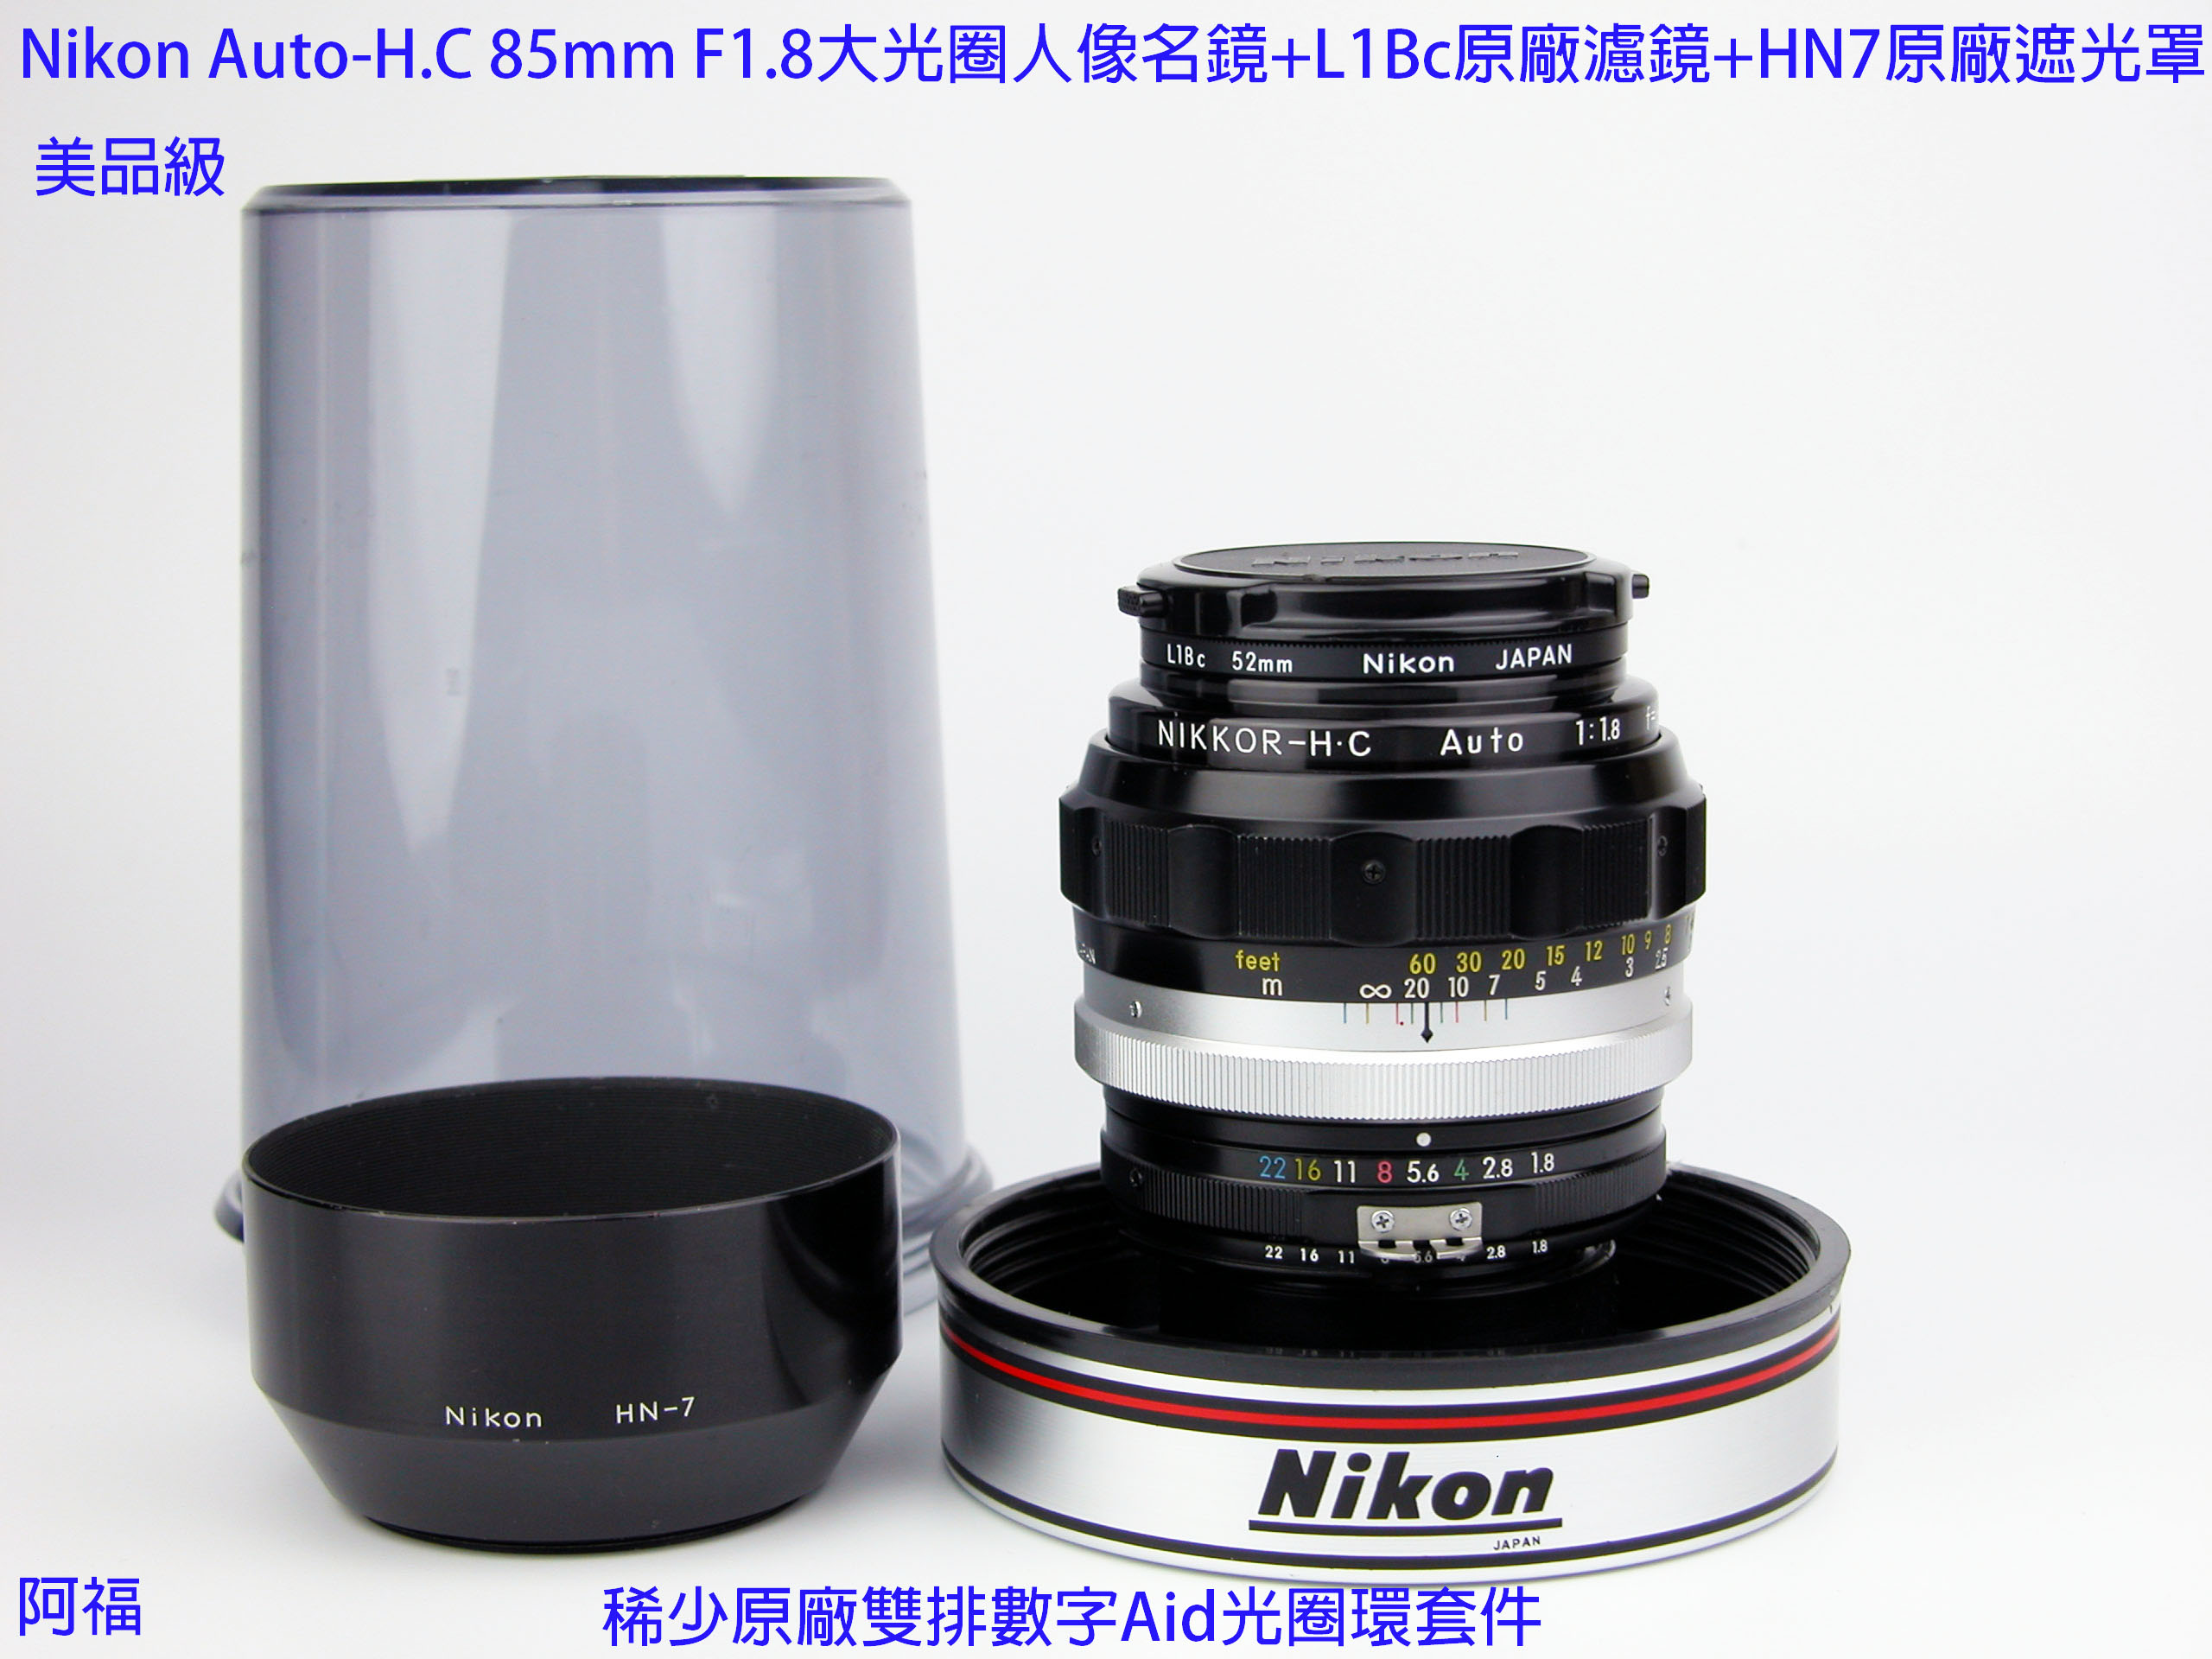 Nikon Auto-H.C 85mm F1.8大光圈人像名鏡+稀少Aid光圈環+L1Bc原廠濾鏡+